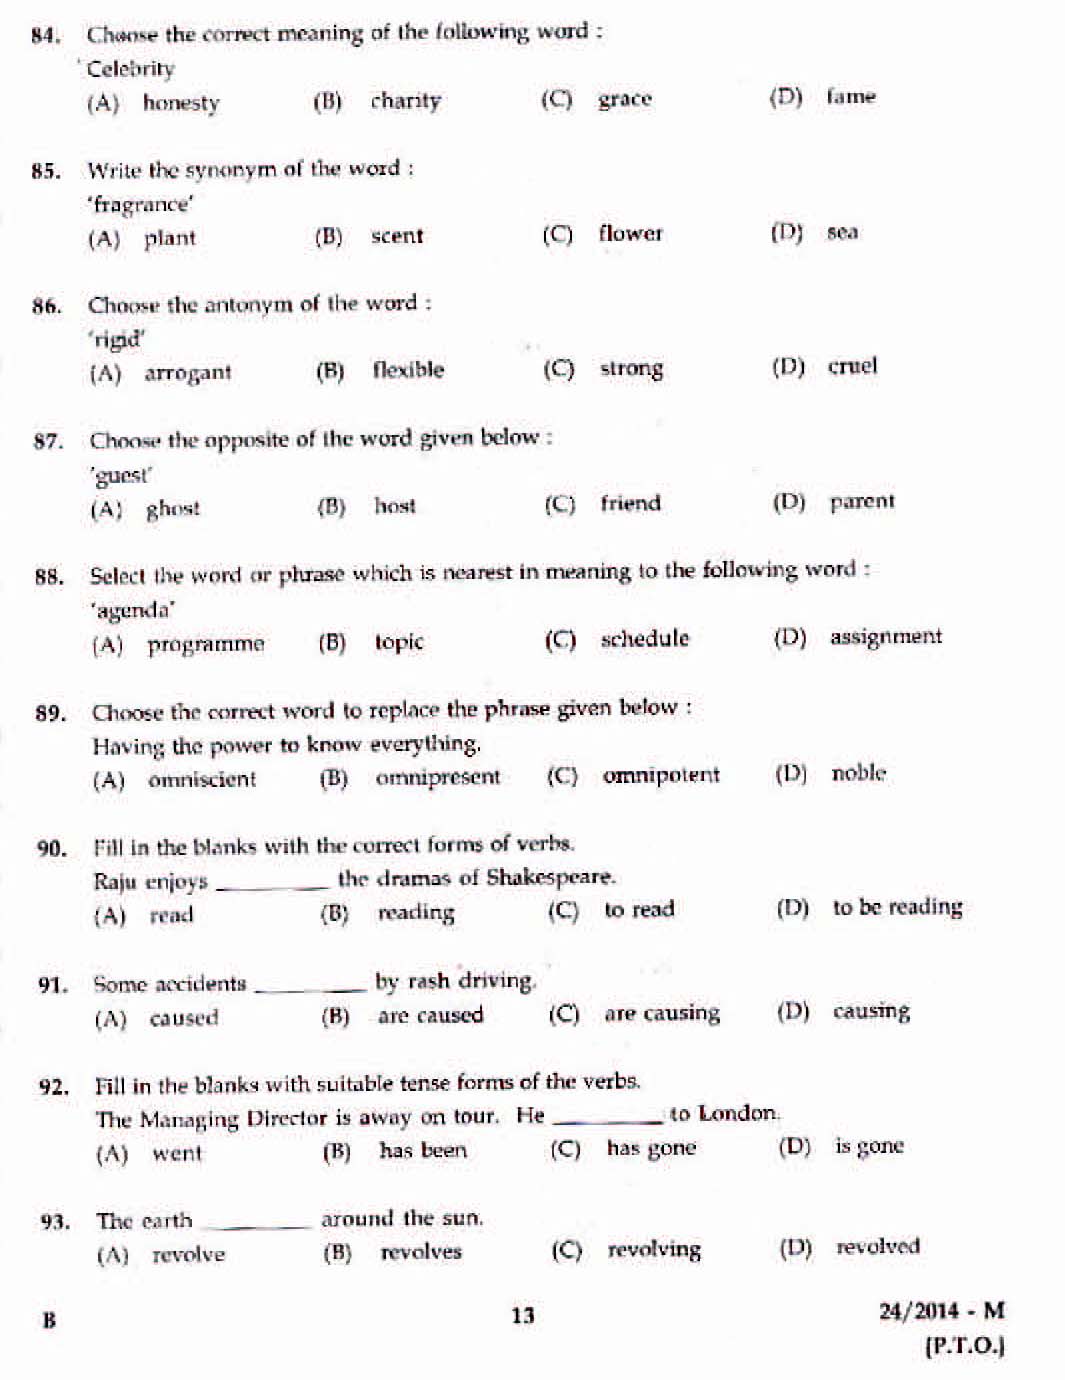 LD Clerk Malappuram Question Paper Malayalam 2014 Paper Code 242014 M 9